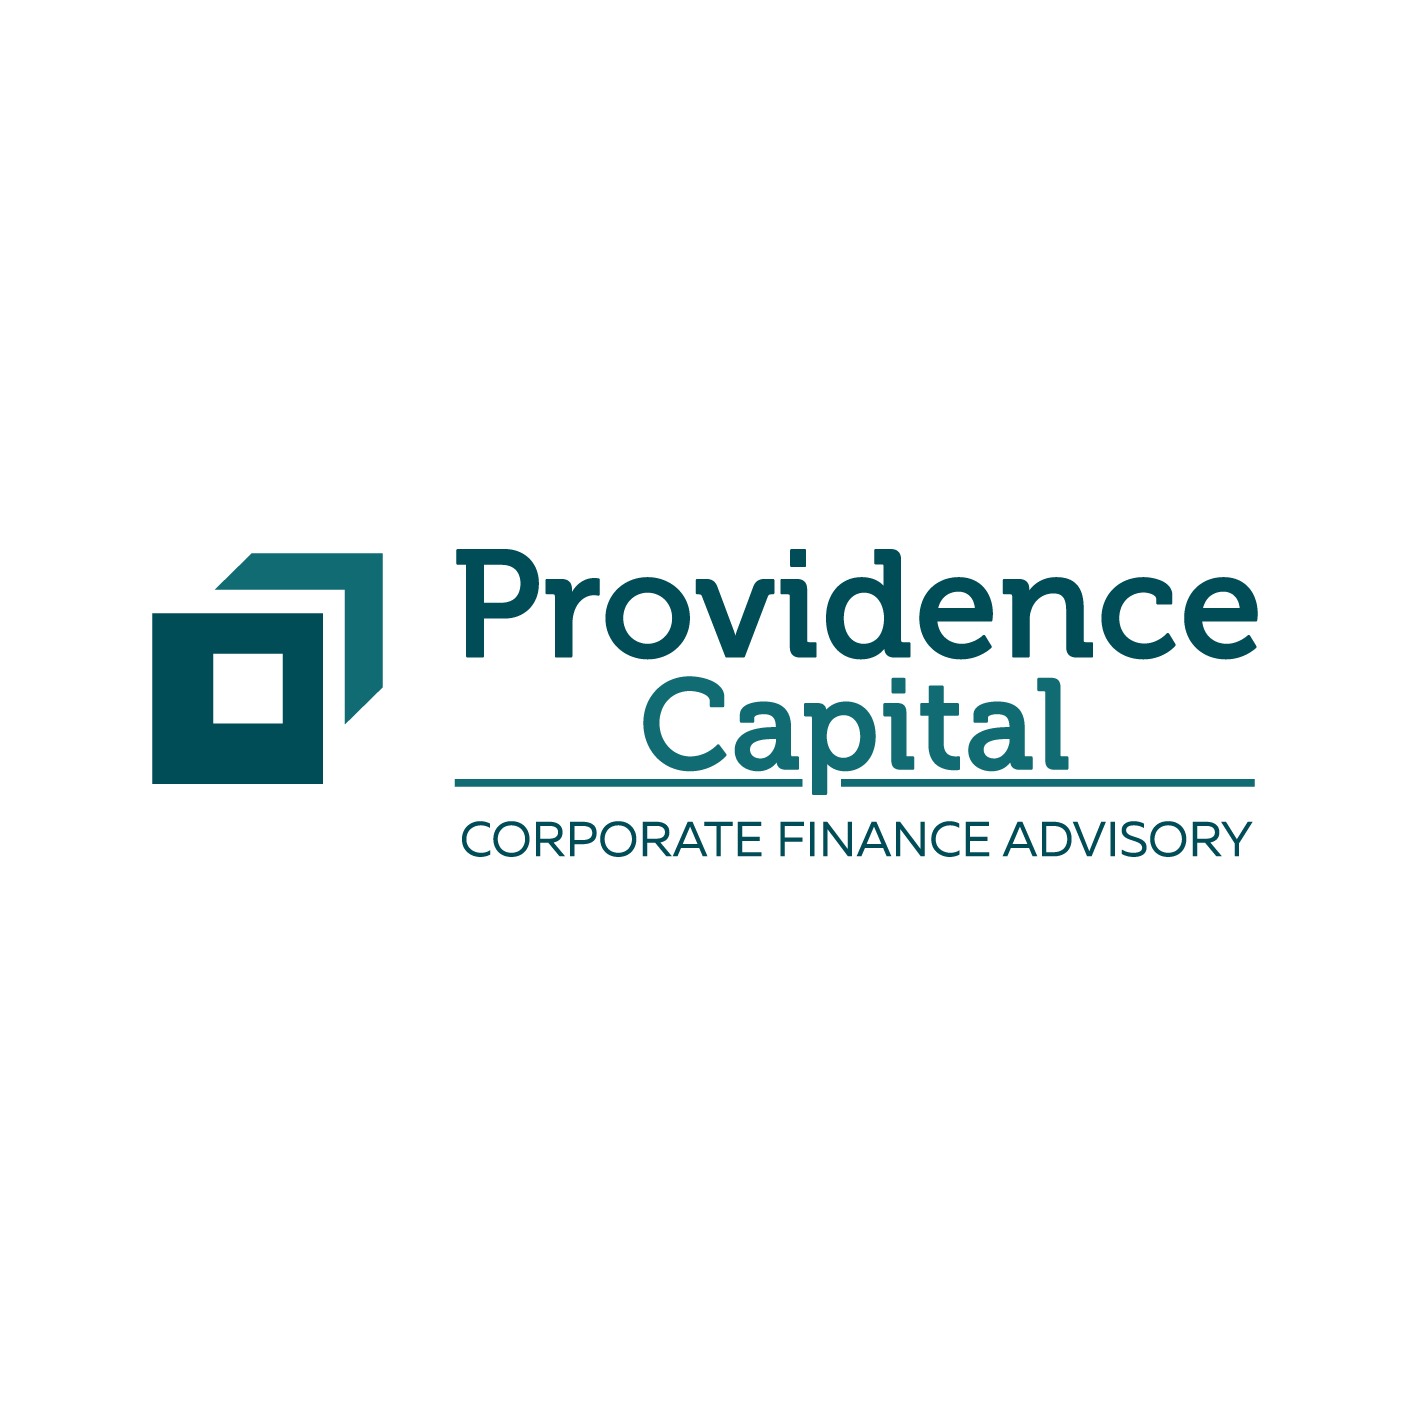 Providence Capital